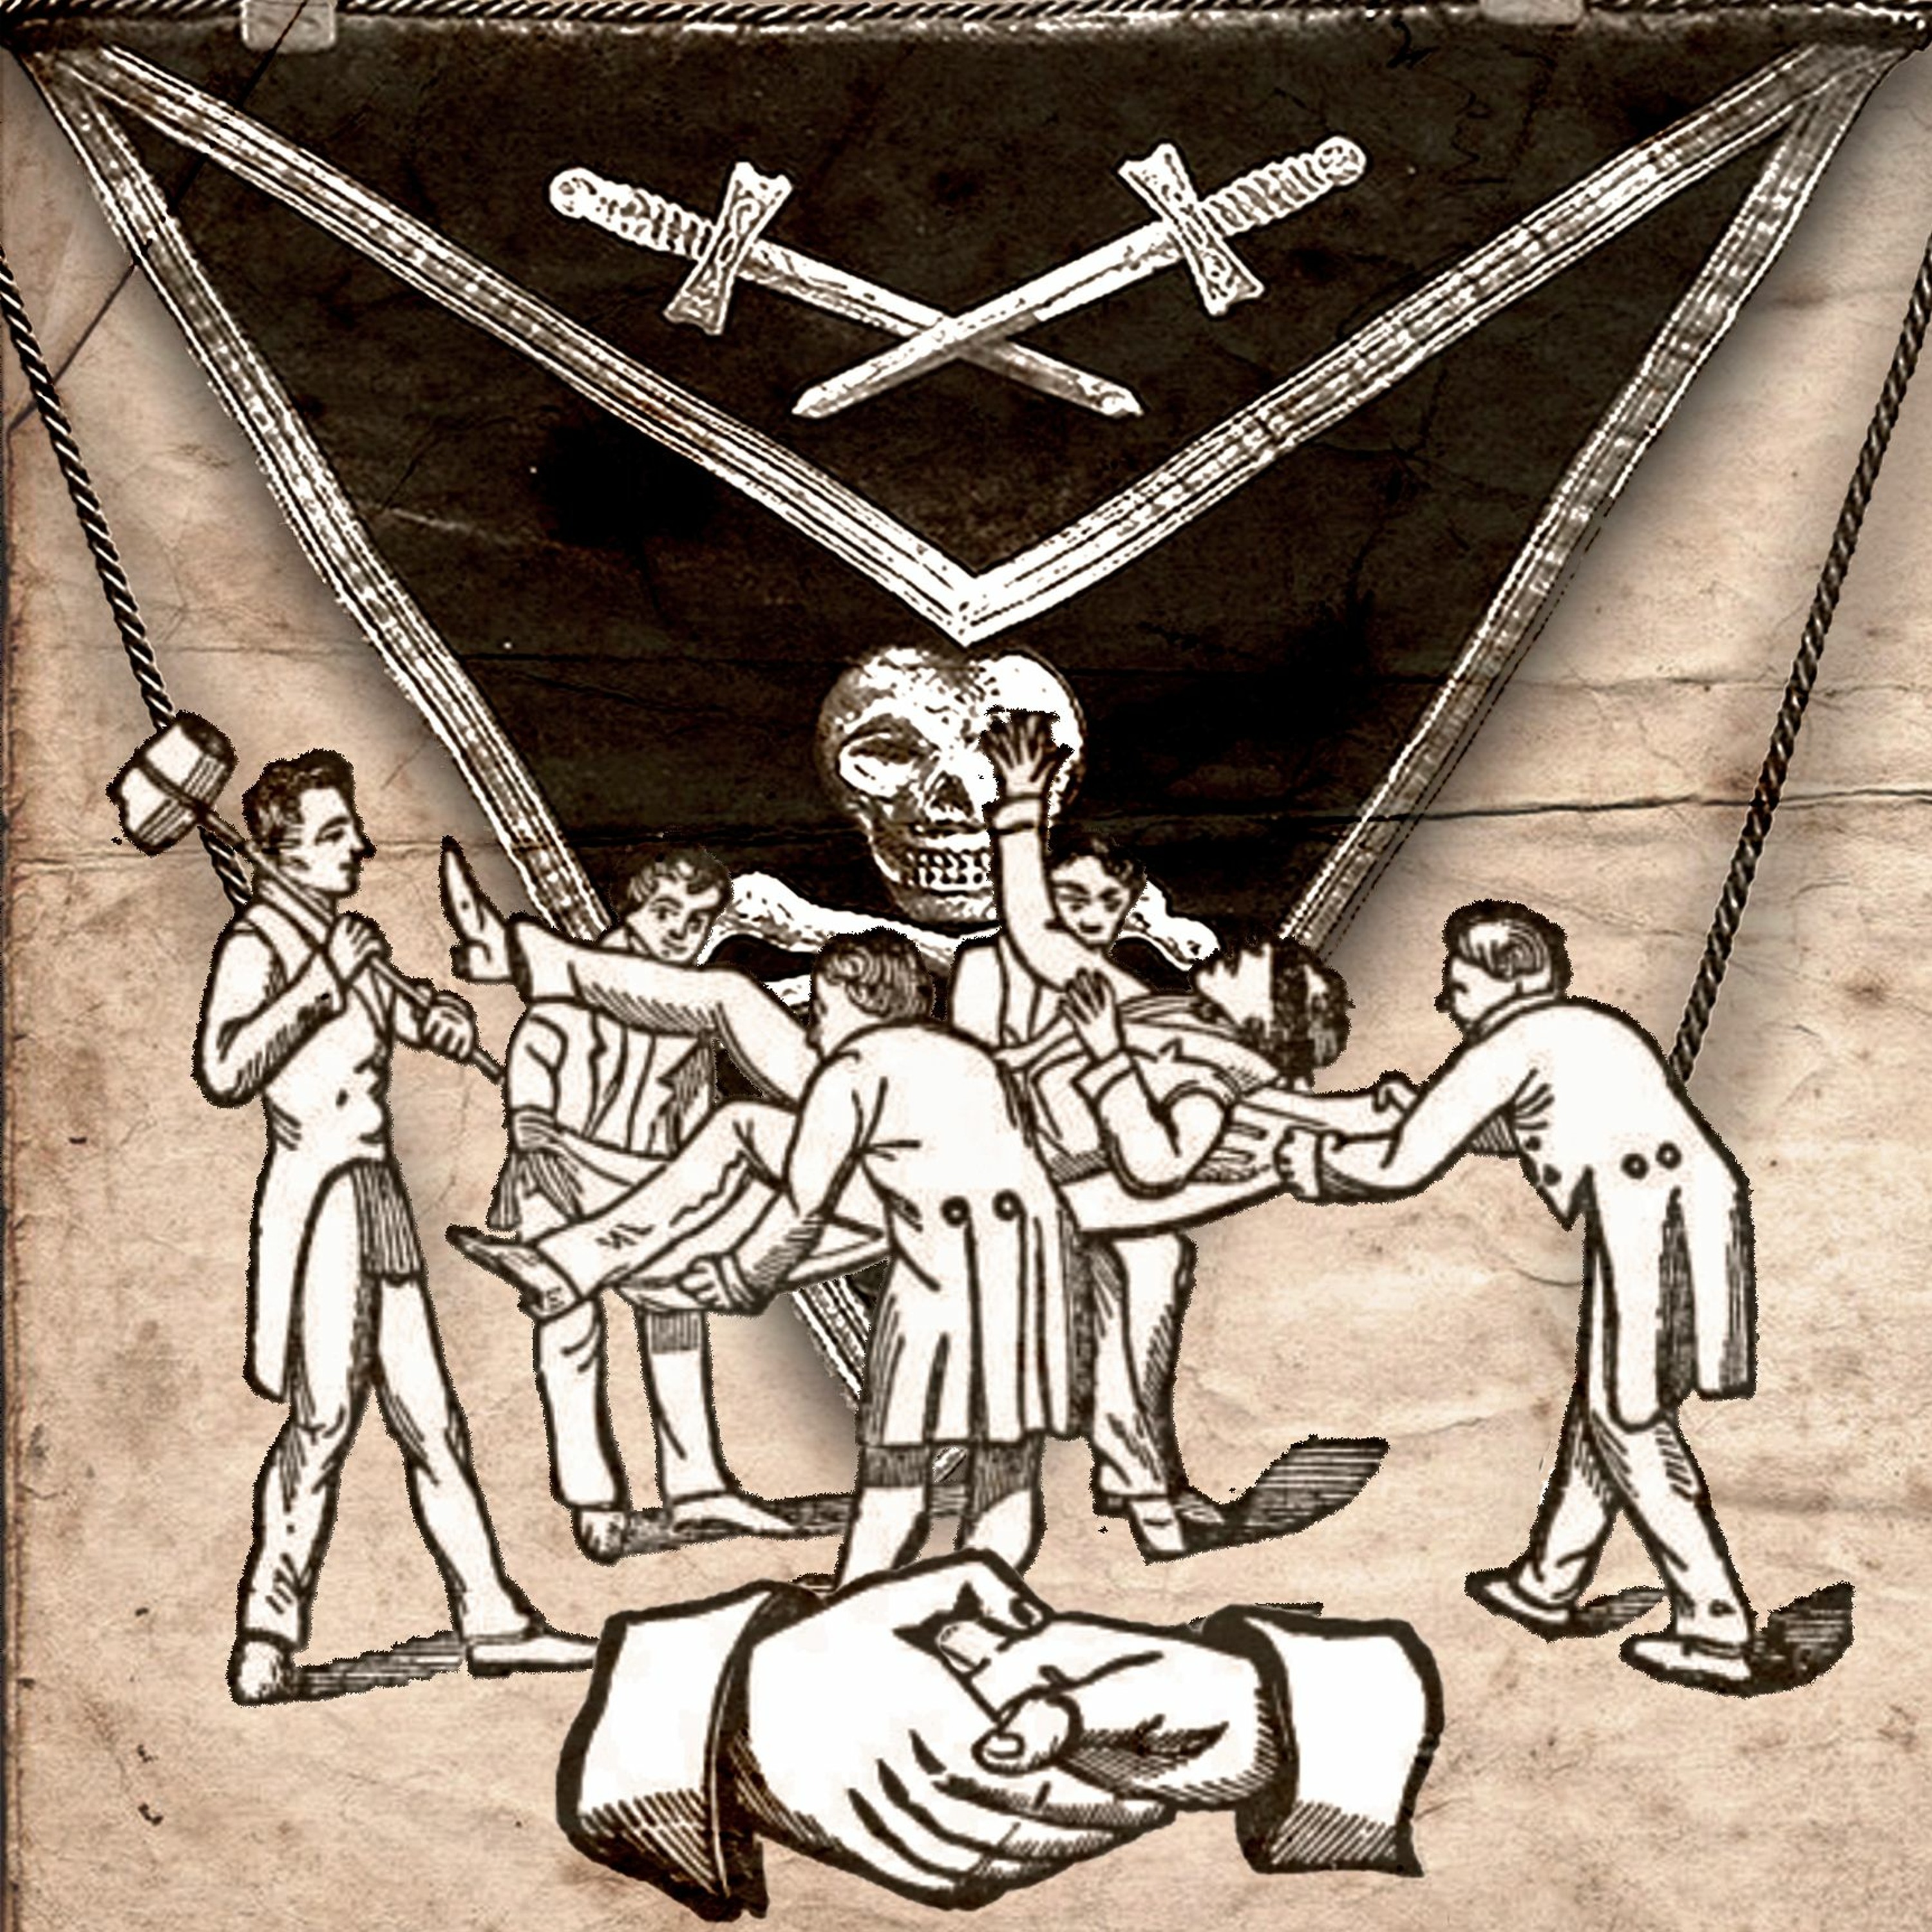 Anti-Masonry, Prince Hall, Joseph Smith & Albert Pike, Masonic History of the US Part 2 [UNLOCKED]